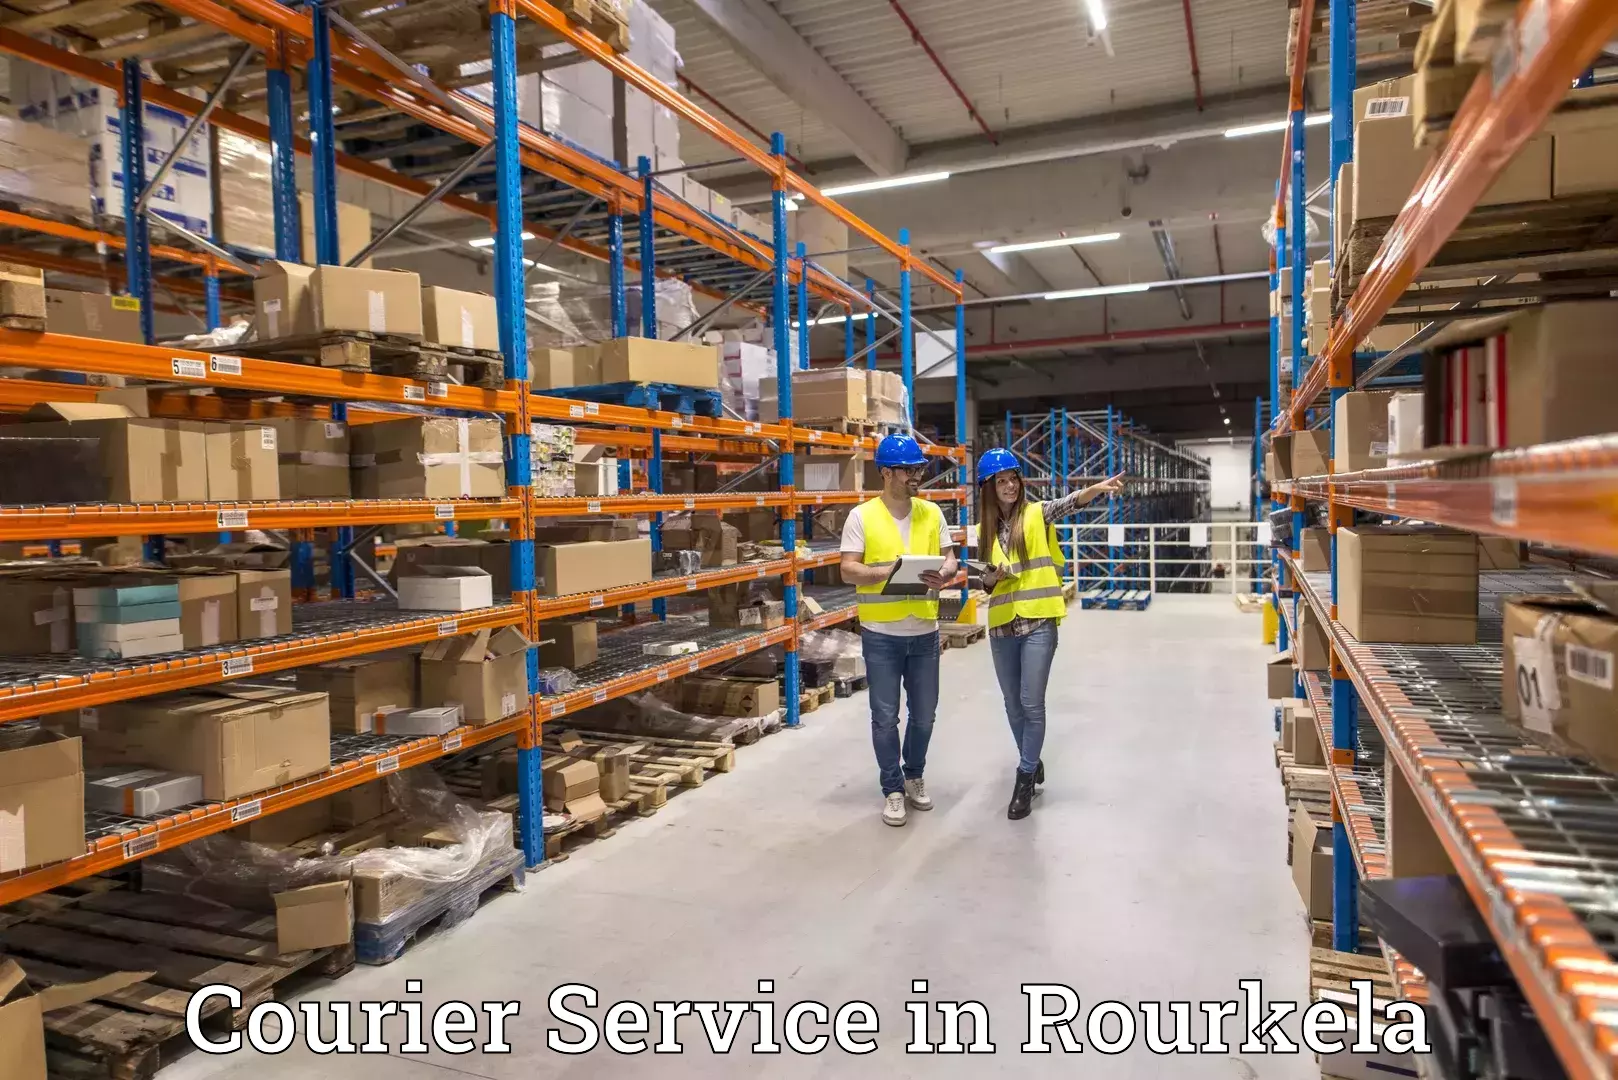 Courier service innovation in Rourkela